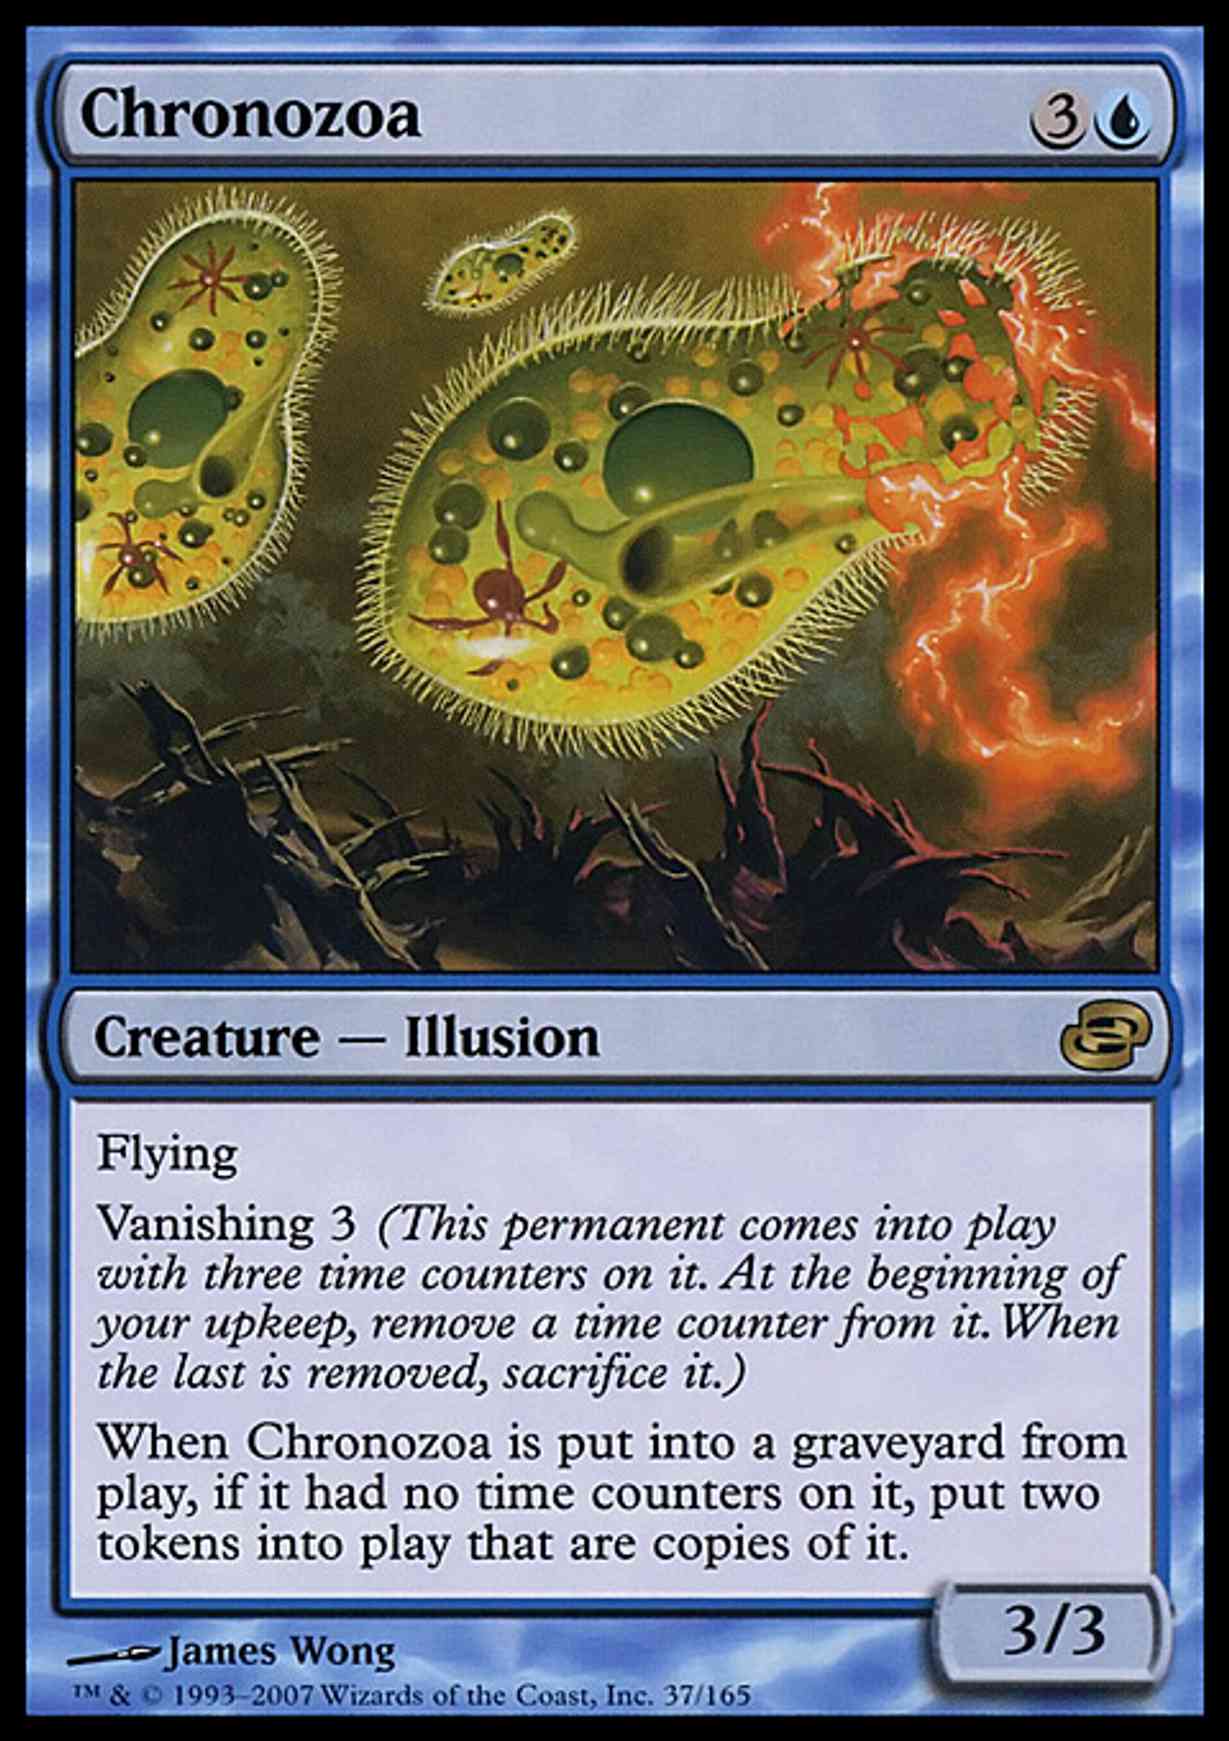 Chronozoa magic card front